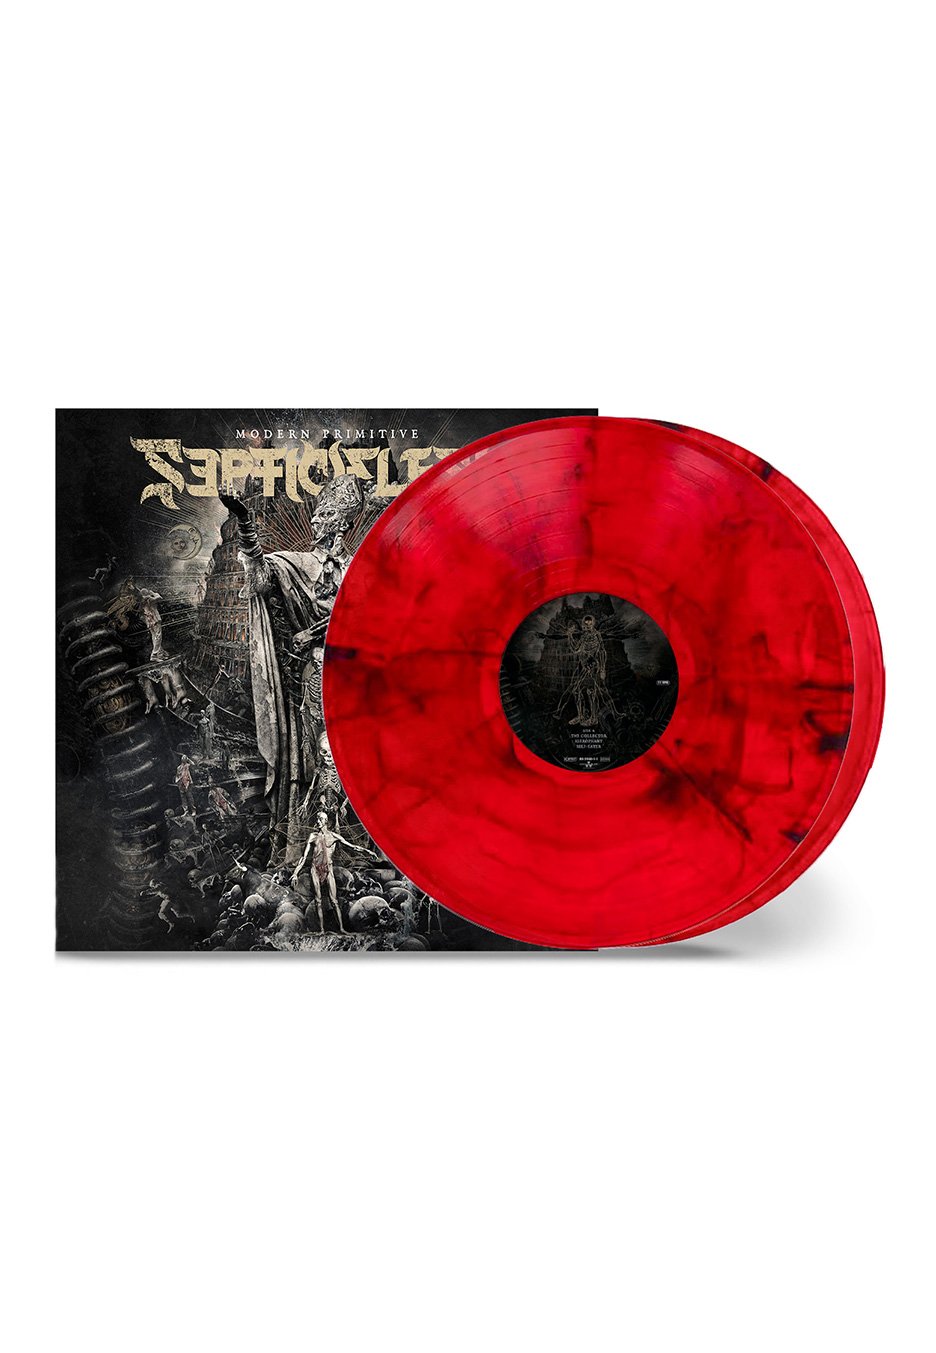 Septicflesh - Modern Primitive Ltd. Red/Black - Marbled 2 Vinyl